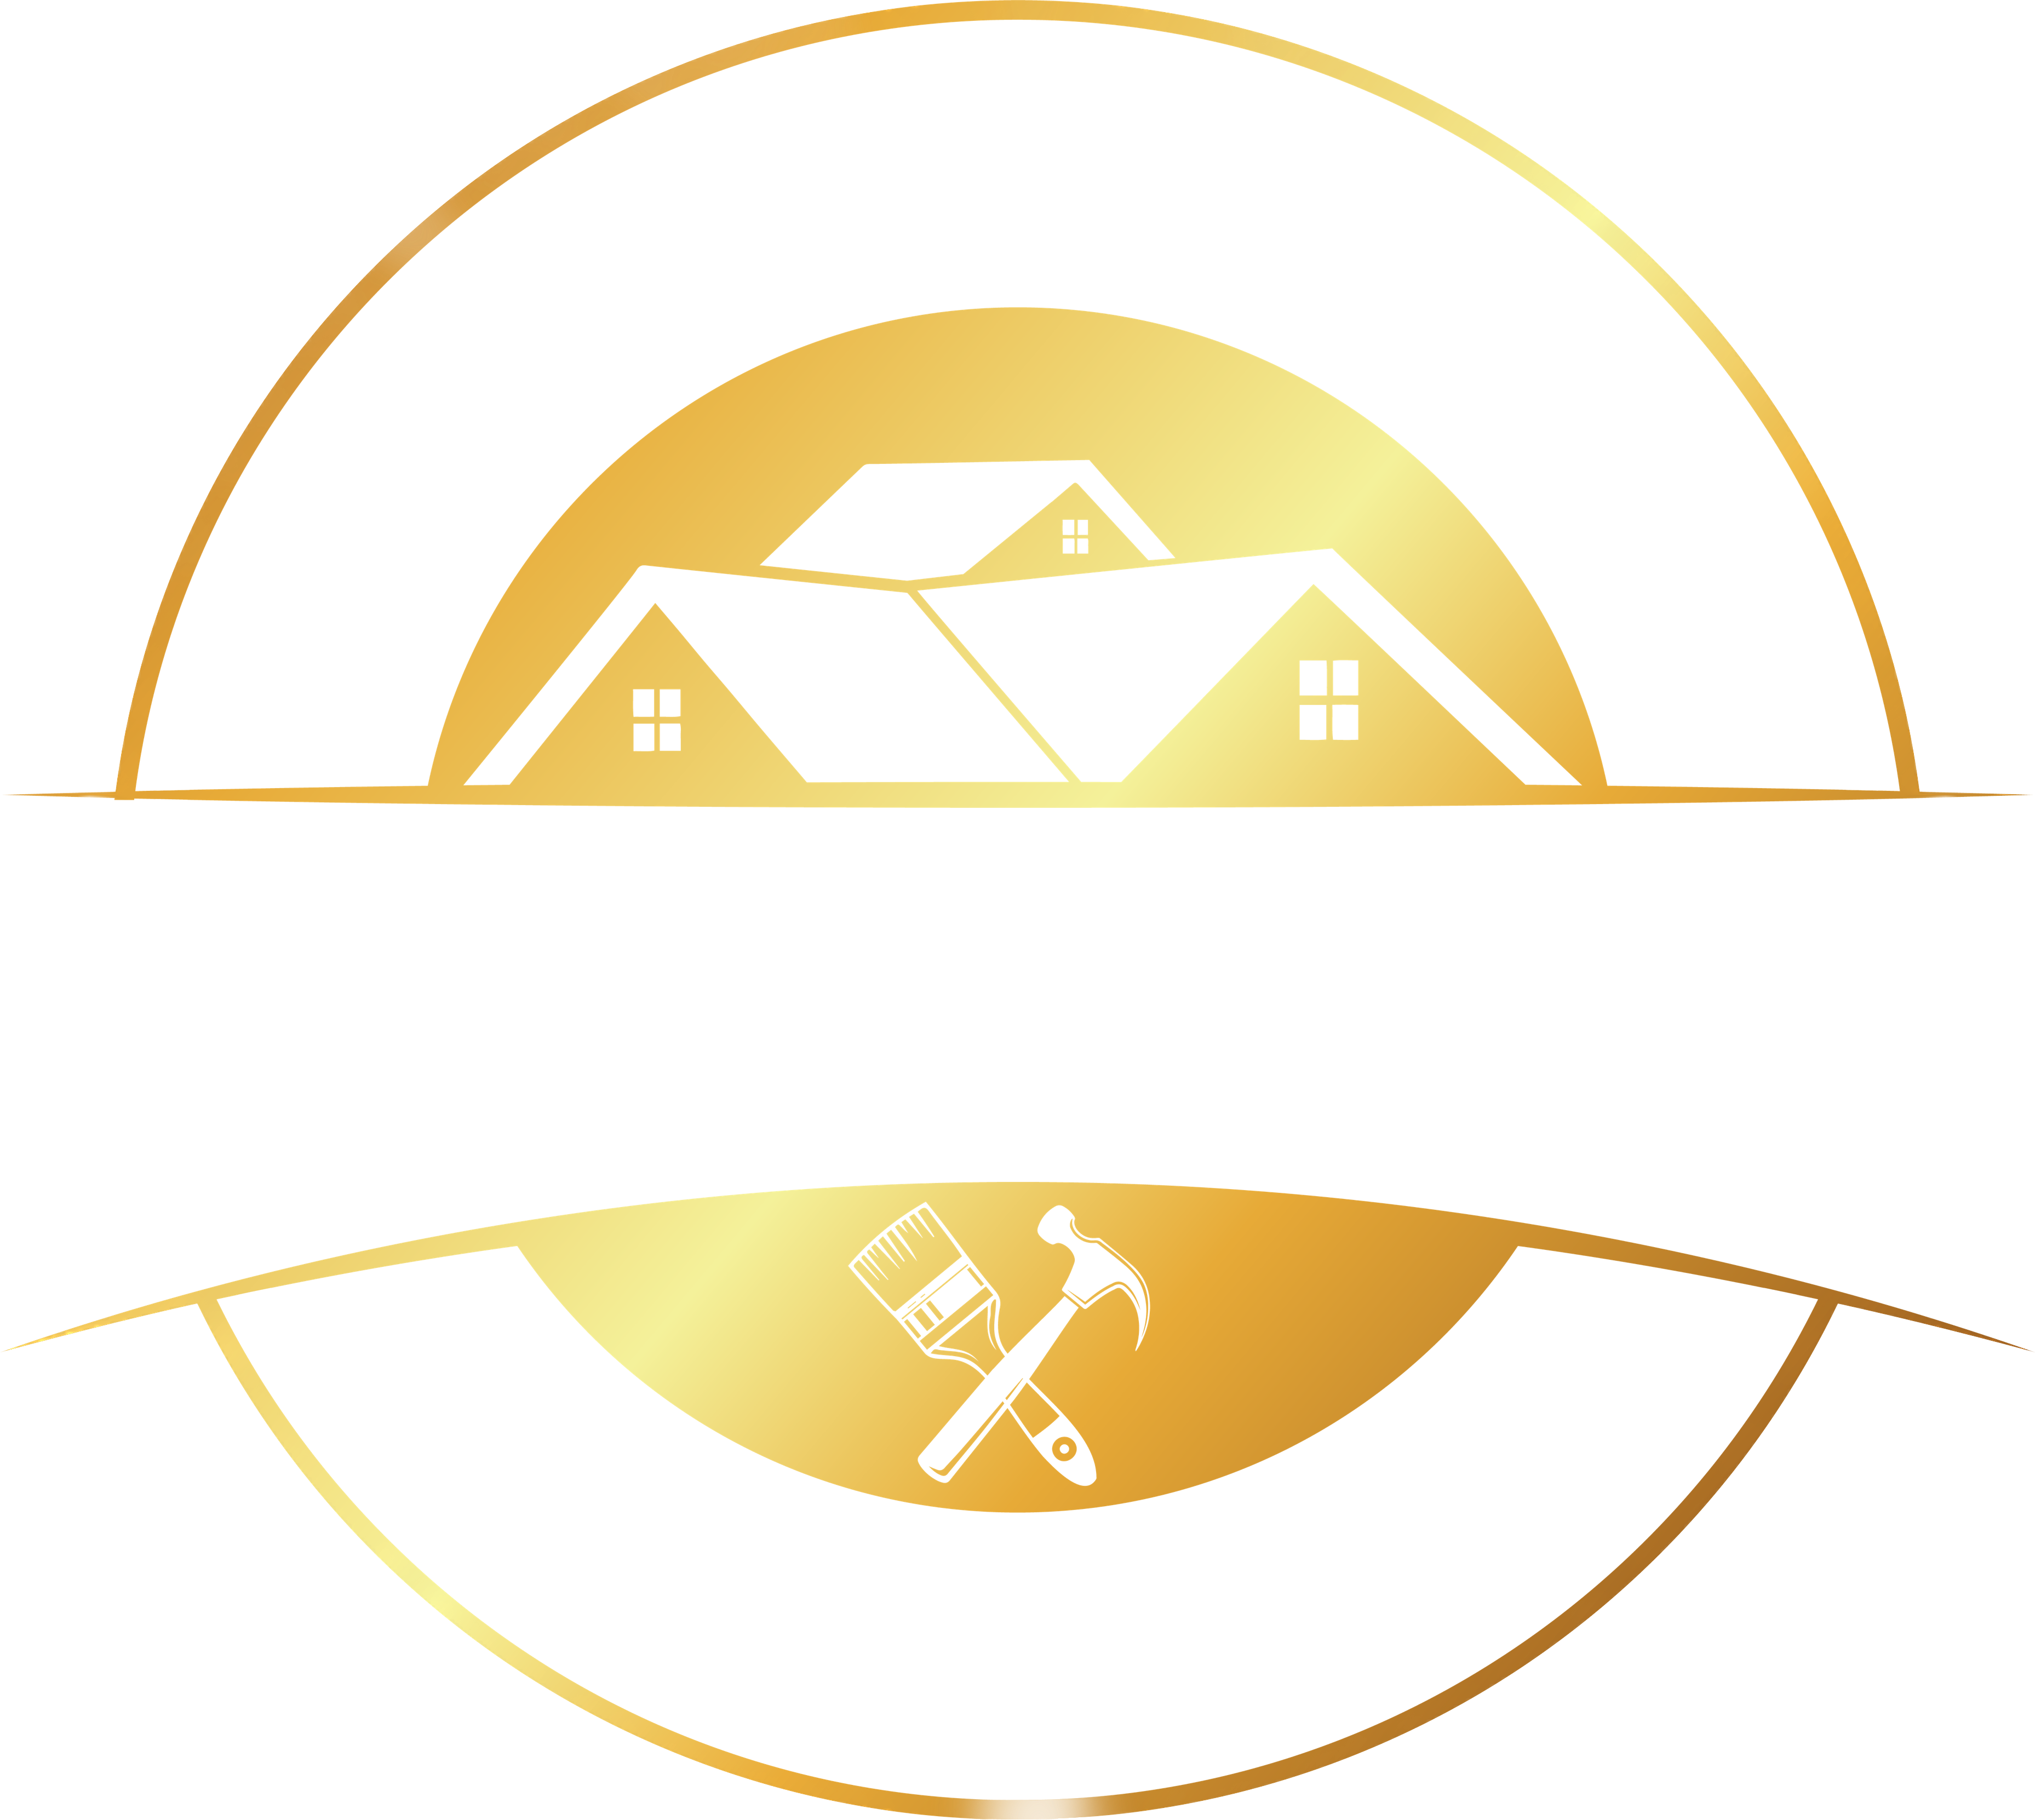 Creative Pro Remodeling Inc. Logo